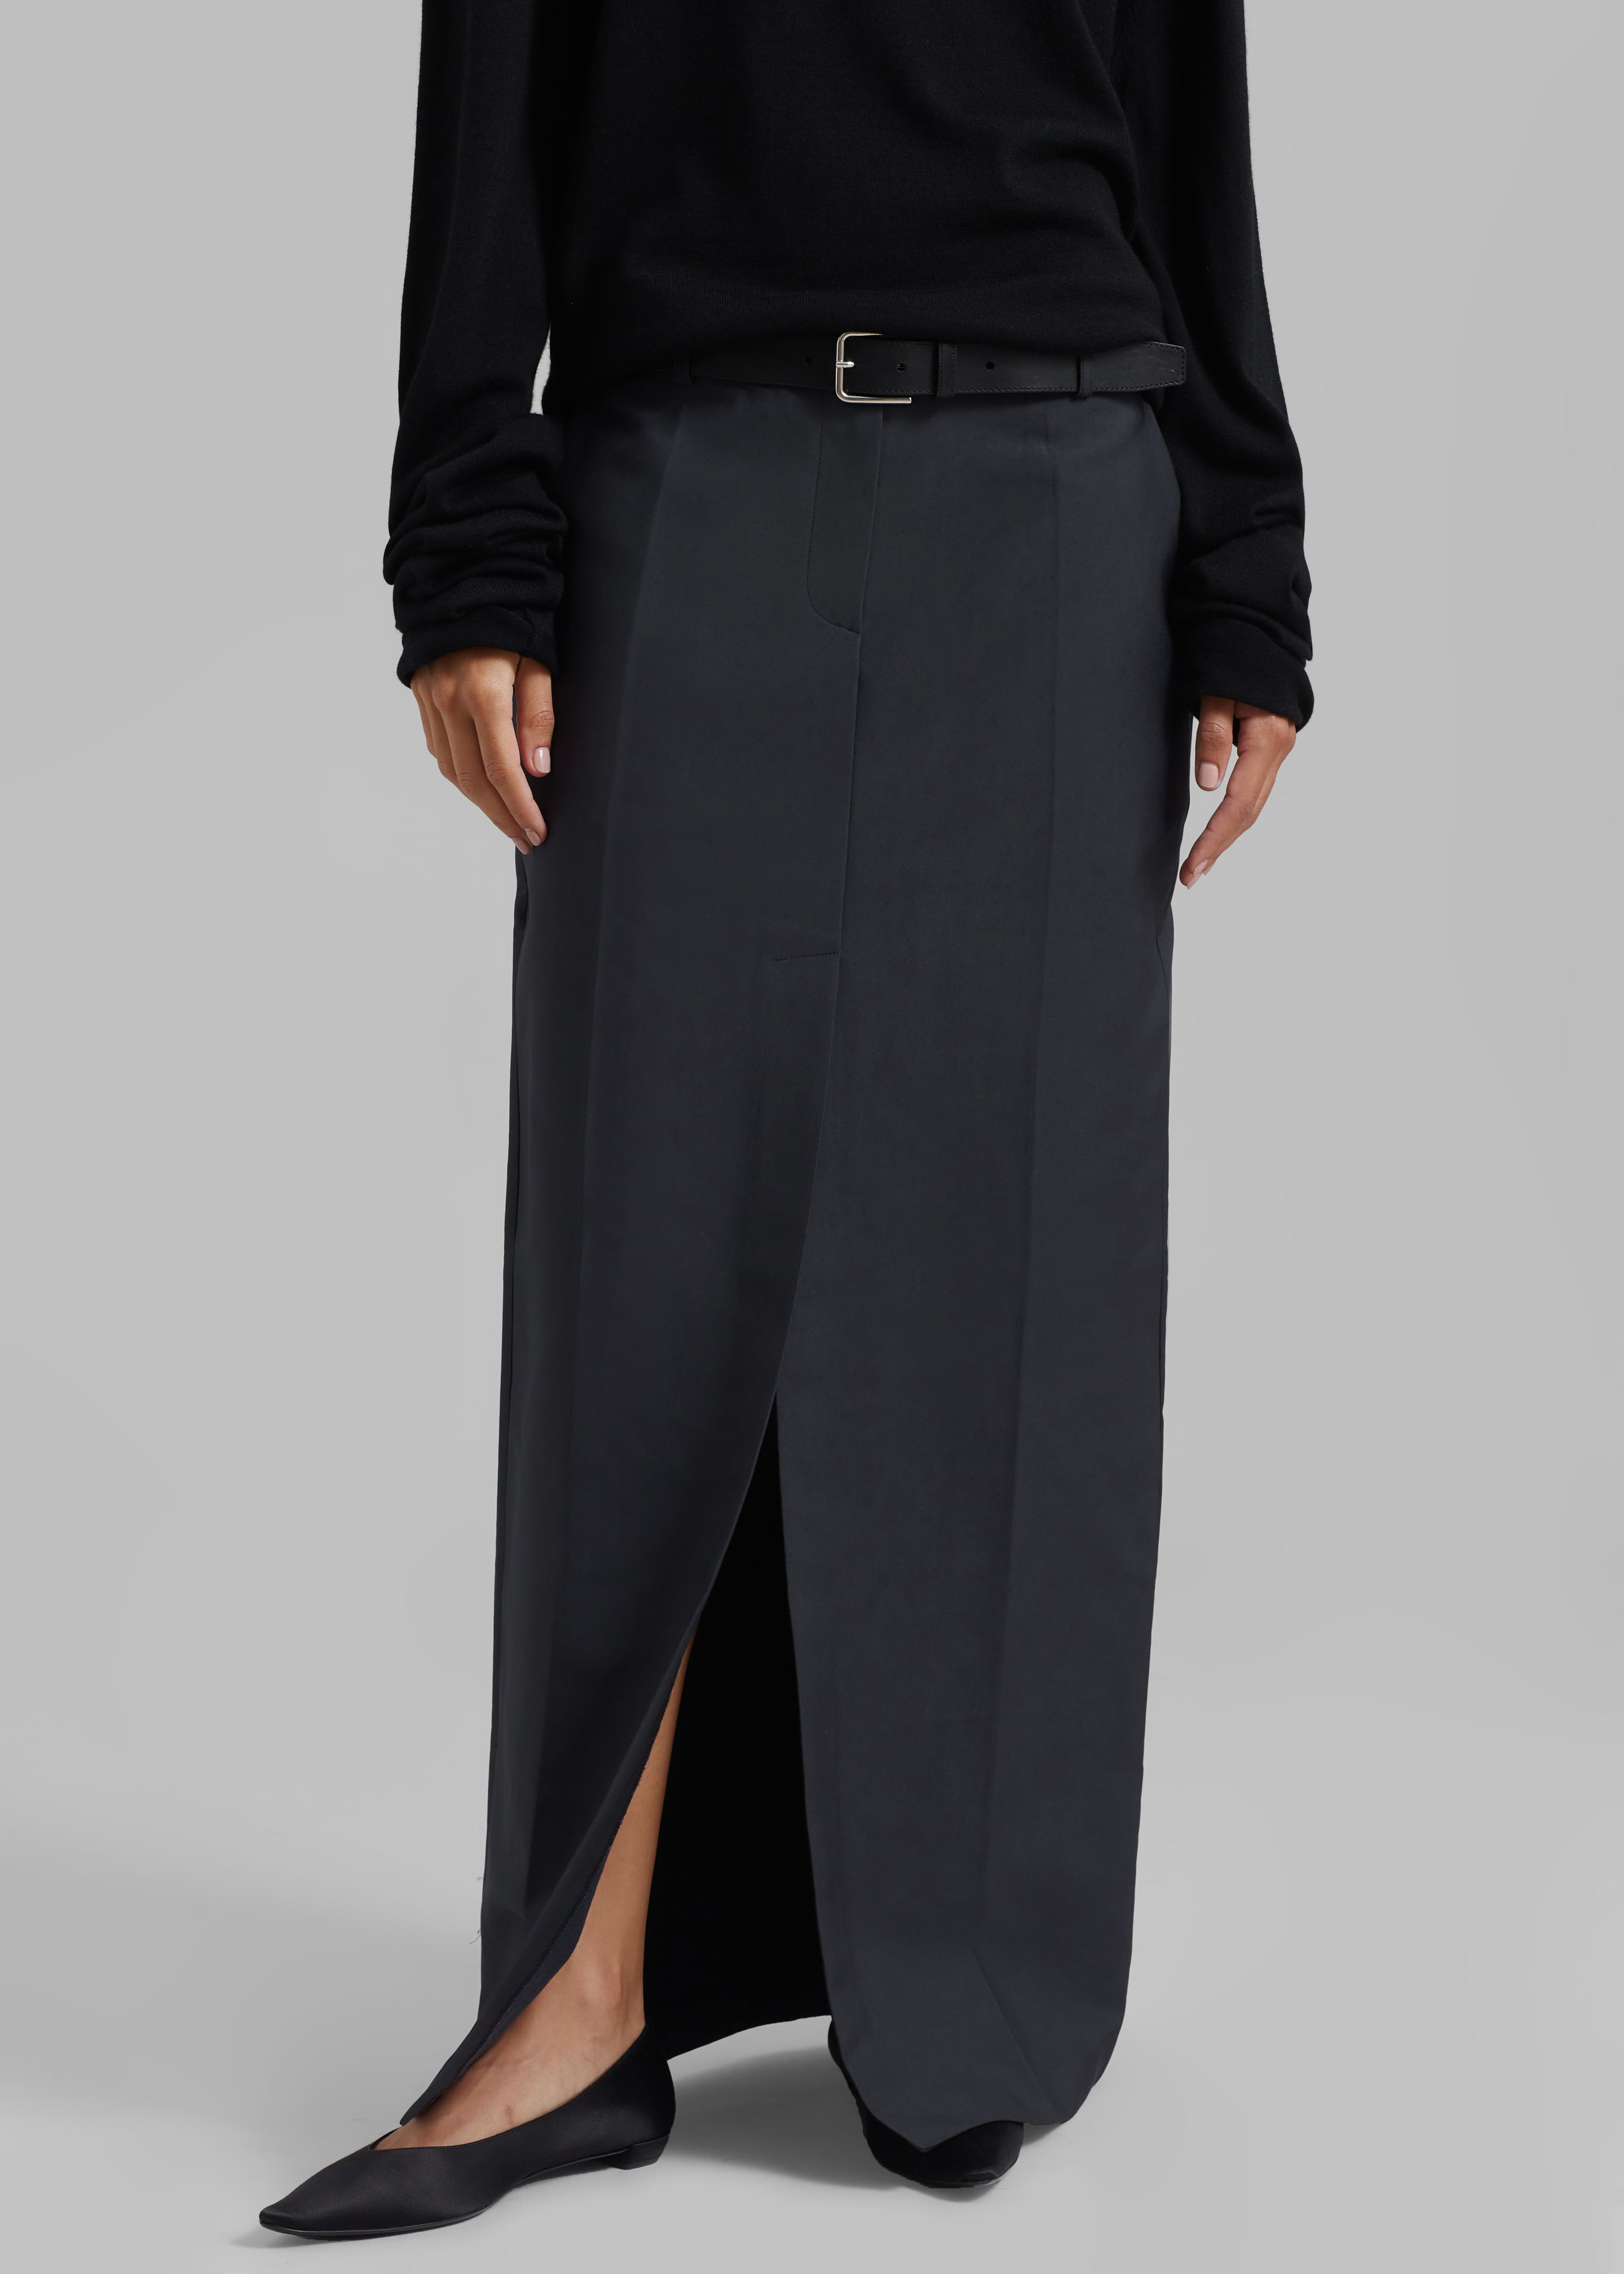 Carley Long Skirt - Charcoal - 2